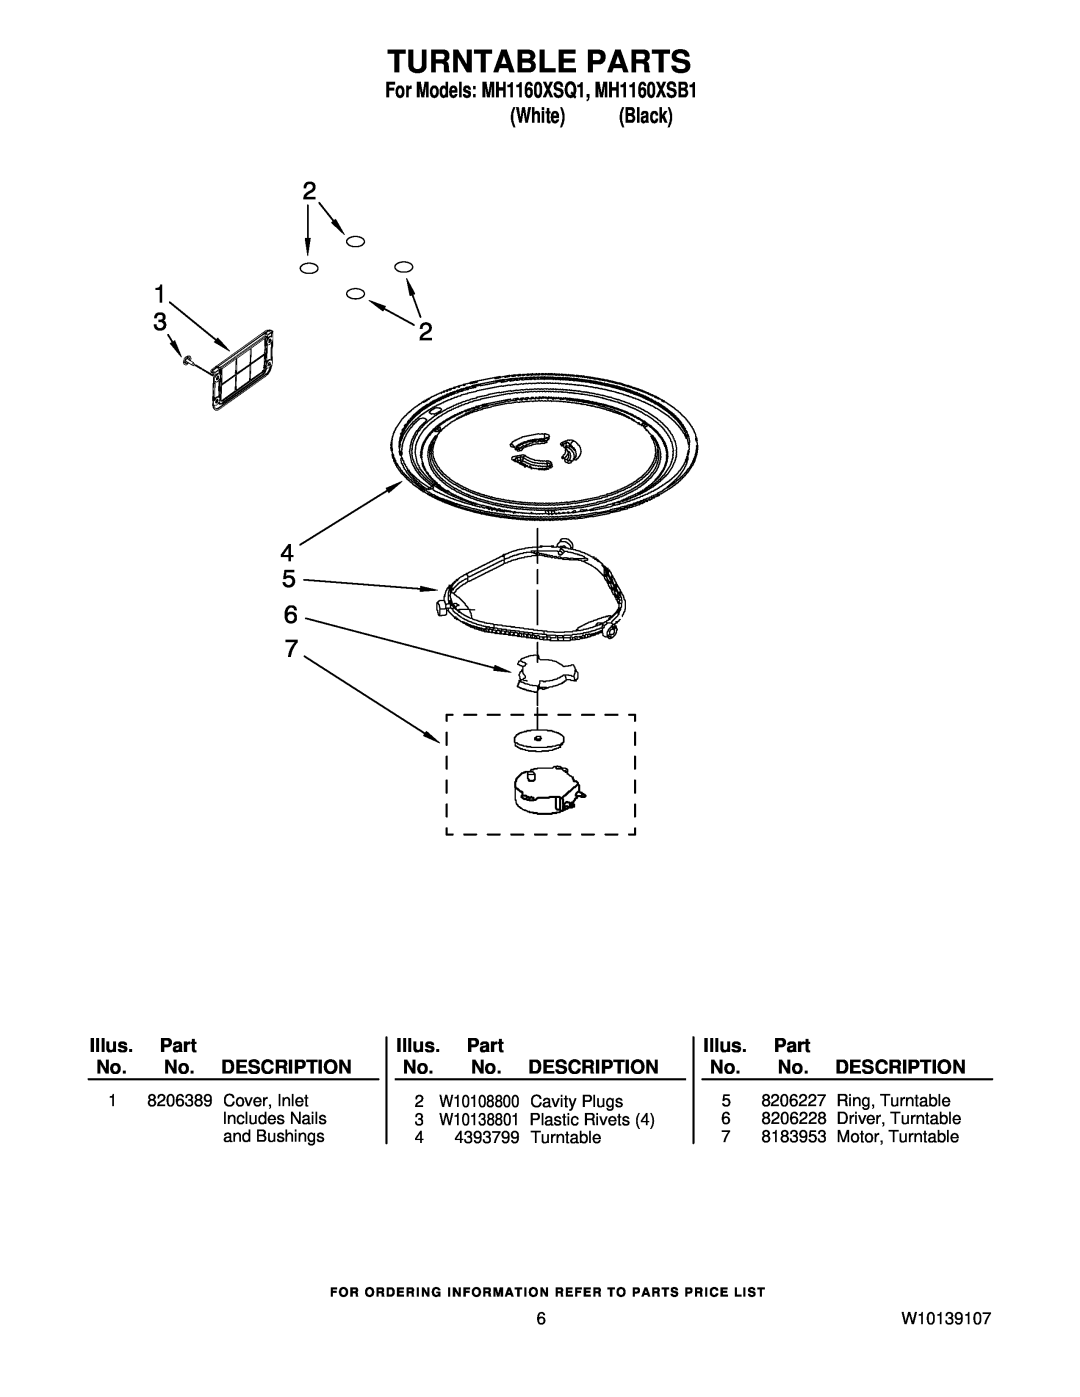 Whirlpool Turntable Parts, For Models MH1160XSQ1, MH1160XSB1 White Black, Illus. Part No. No. DESCRIPTION, W10139107 